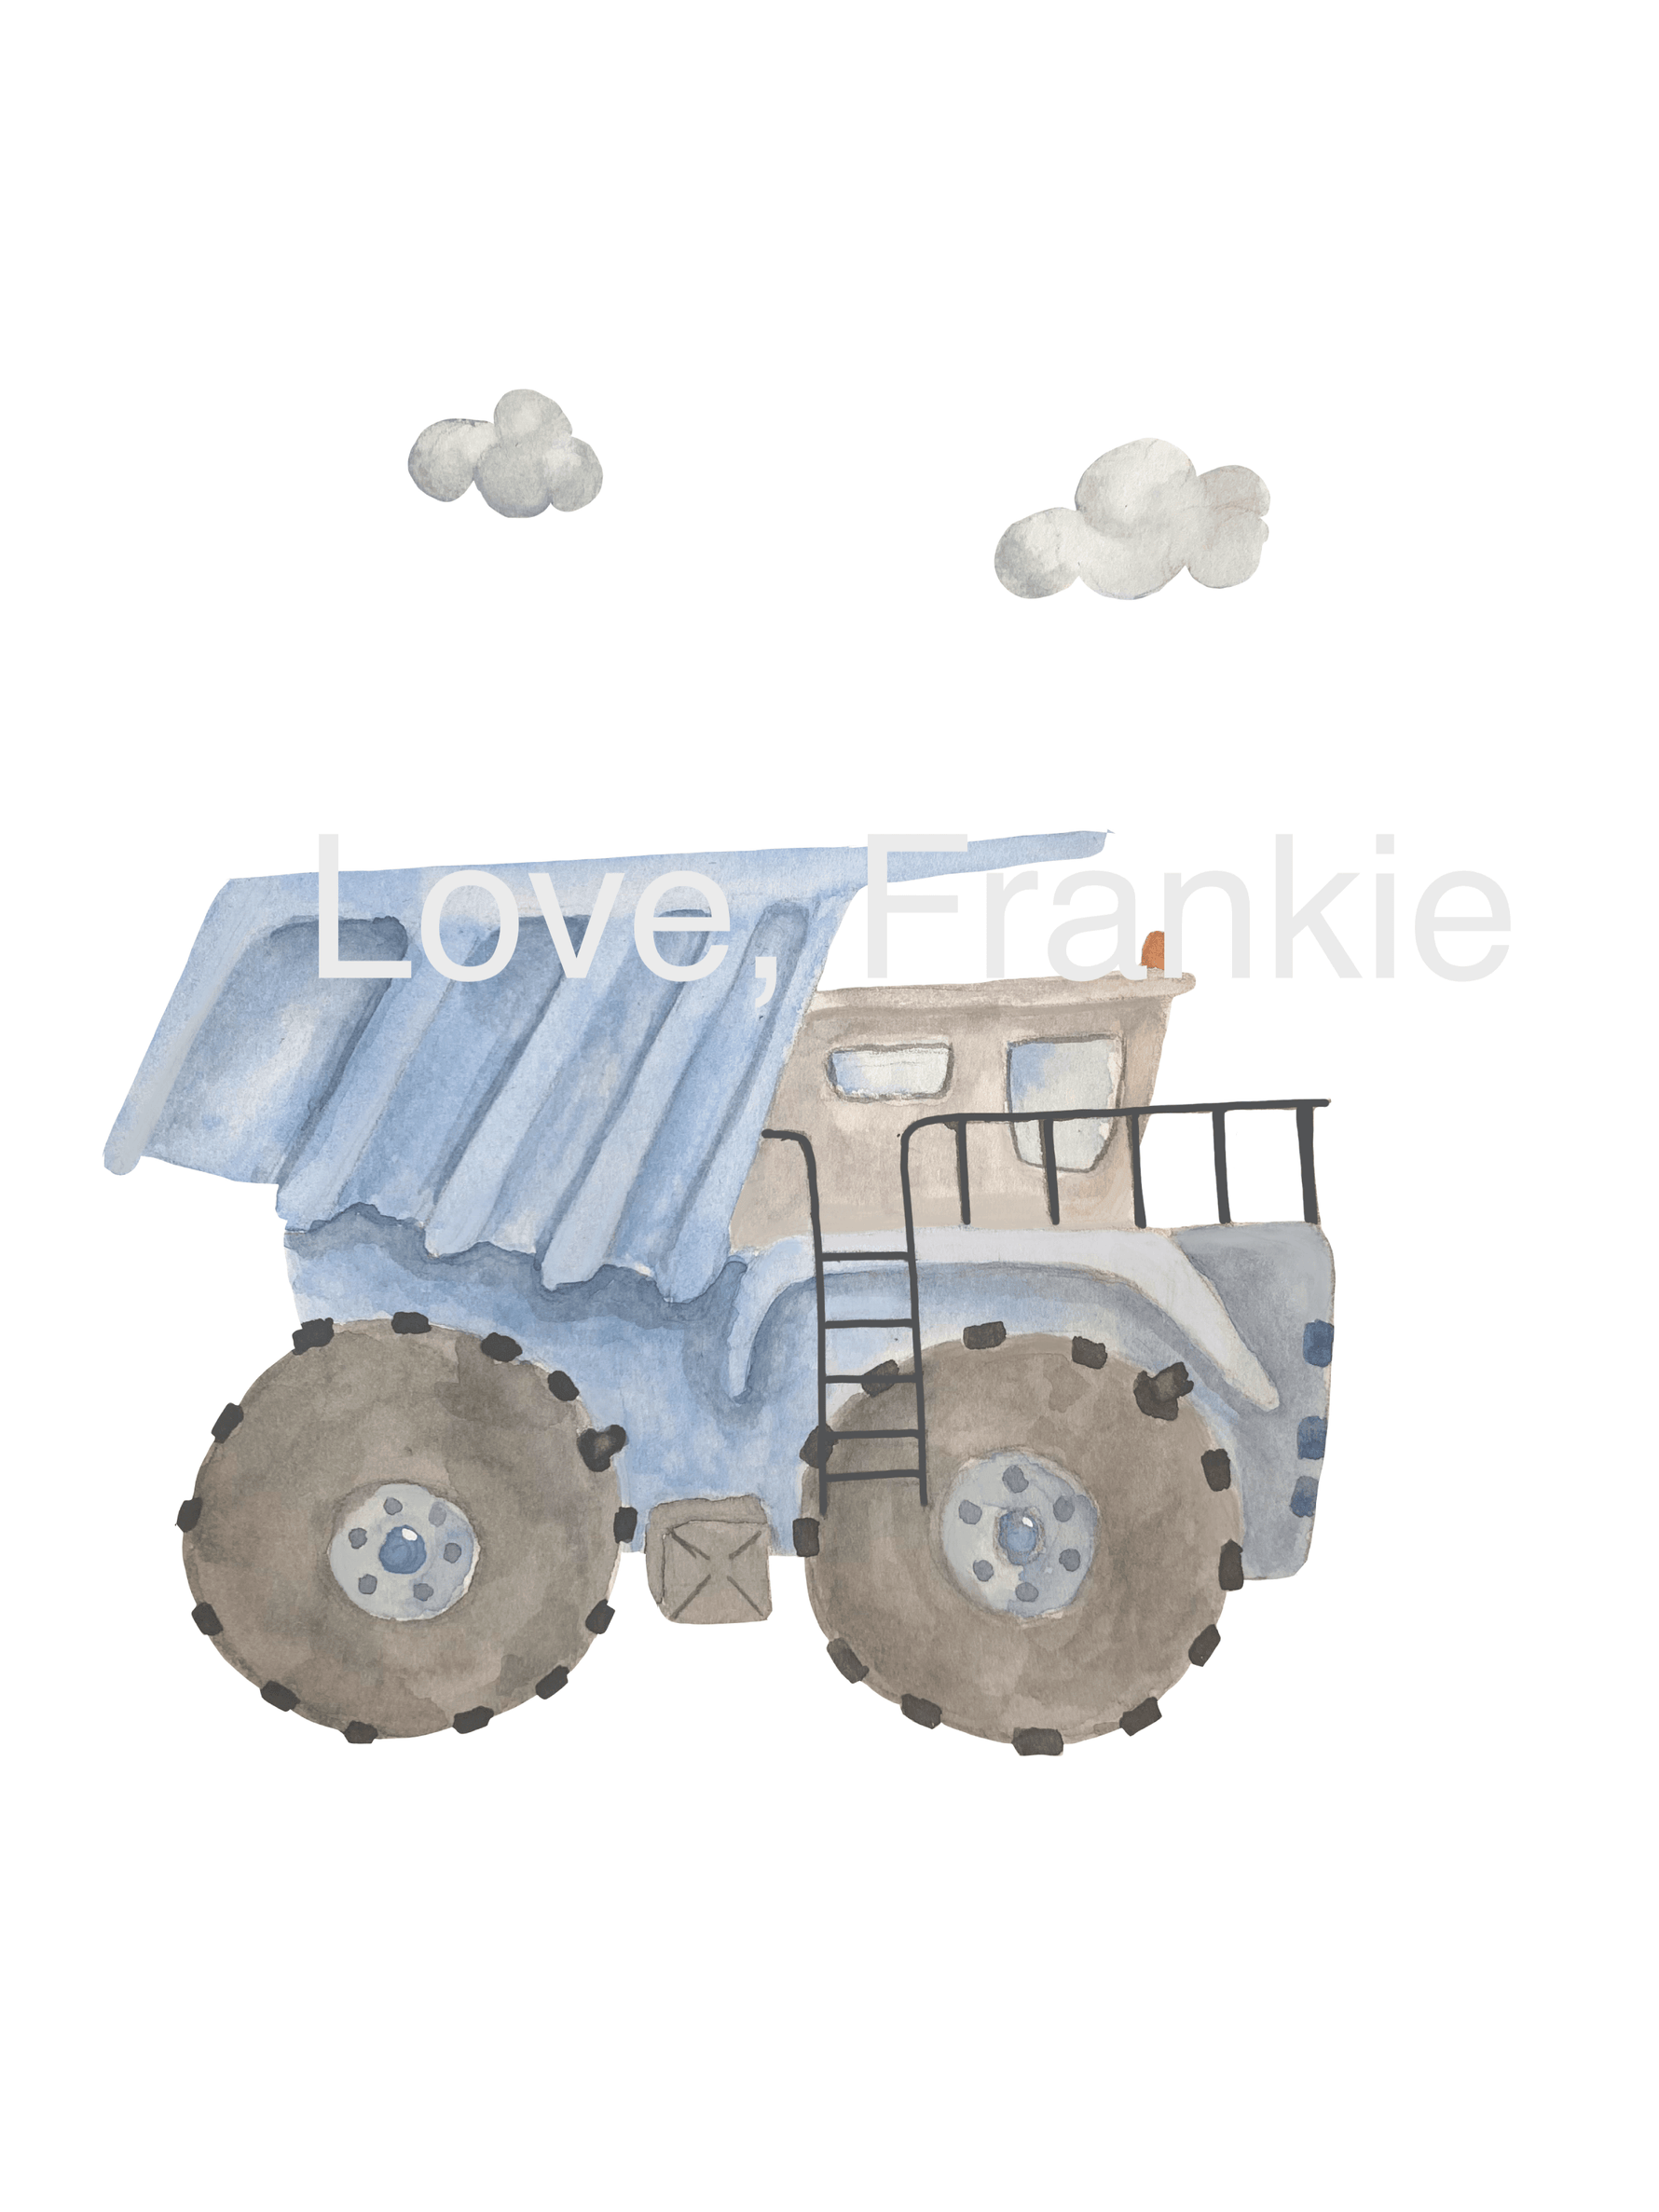 Construction Vehicle Digital Art Prints - lovefrankieart